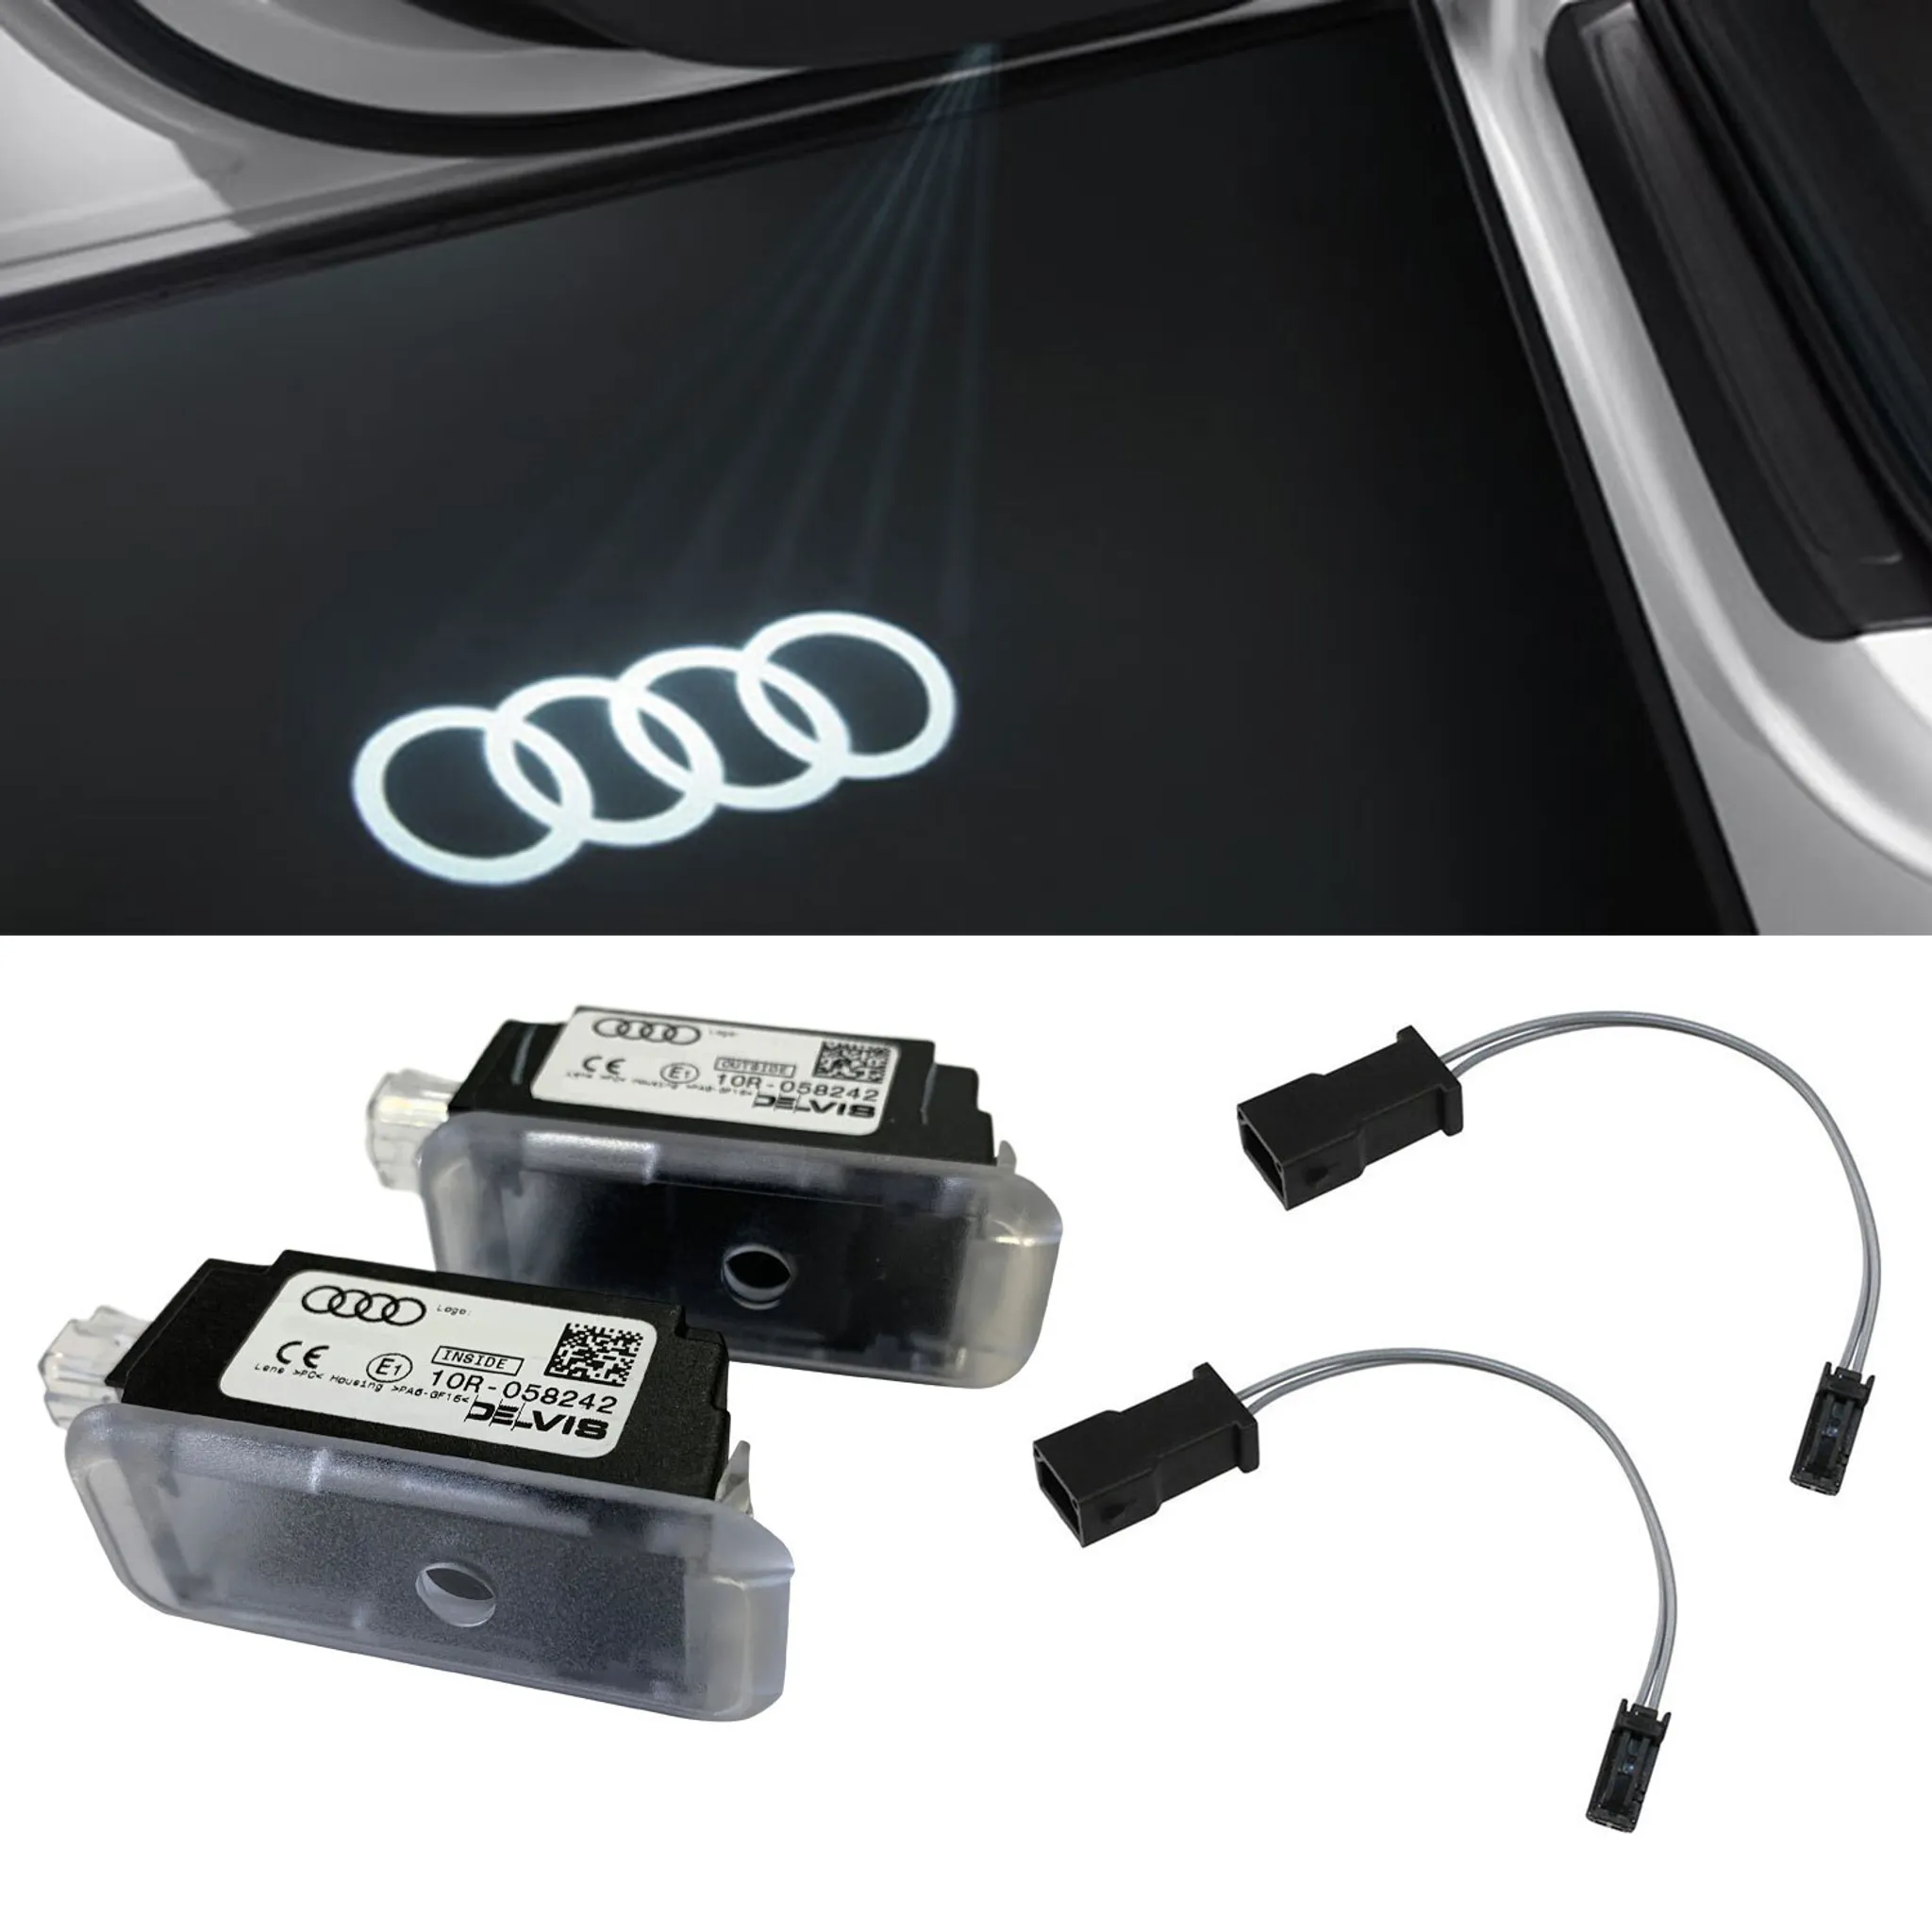 Original Audi RS LED Einstiegsbeleuchtung Logo Türe Projektor SET Links +  Rechts inklusive Adapter SET 4S0947409G + 4S0947410G für viele Audi